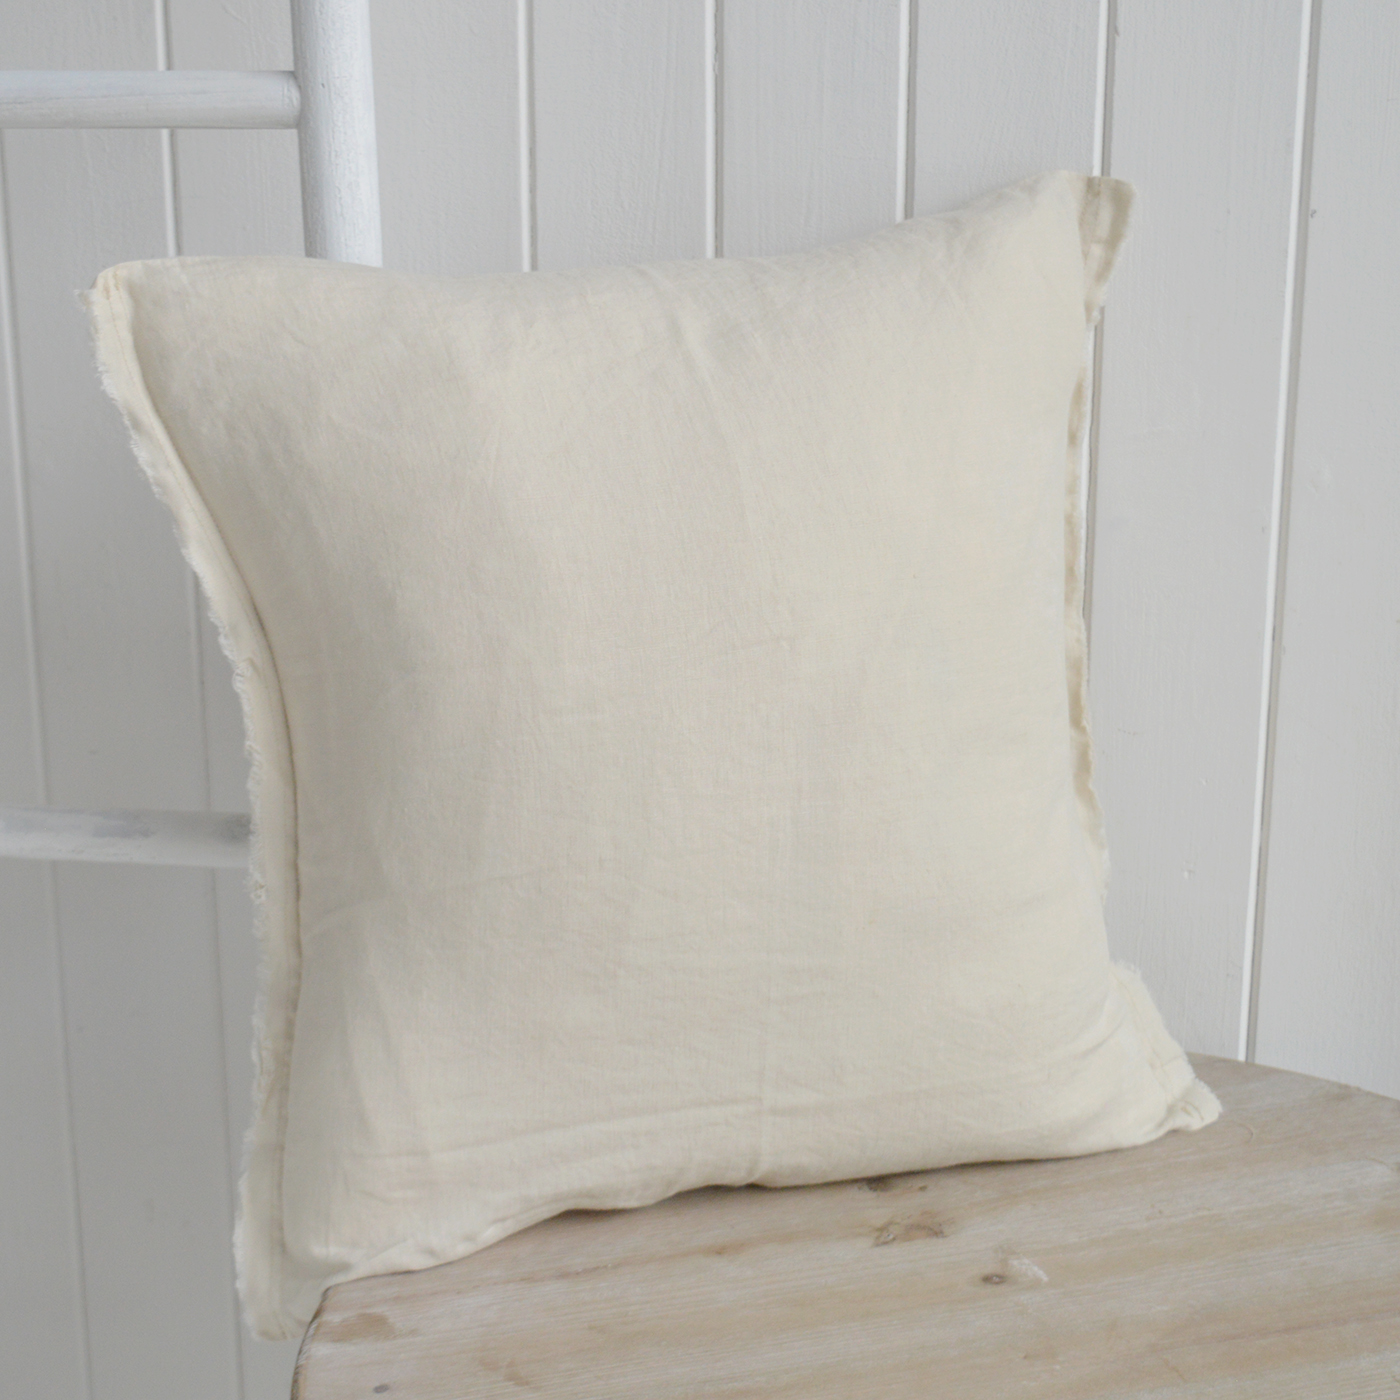 New England cushions and soft furnishings. Hamilton 100% Linen Cushion Covers for coastal, beach house and modern farmhouse interiors - cream frayed